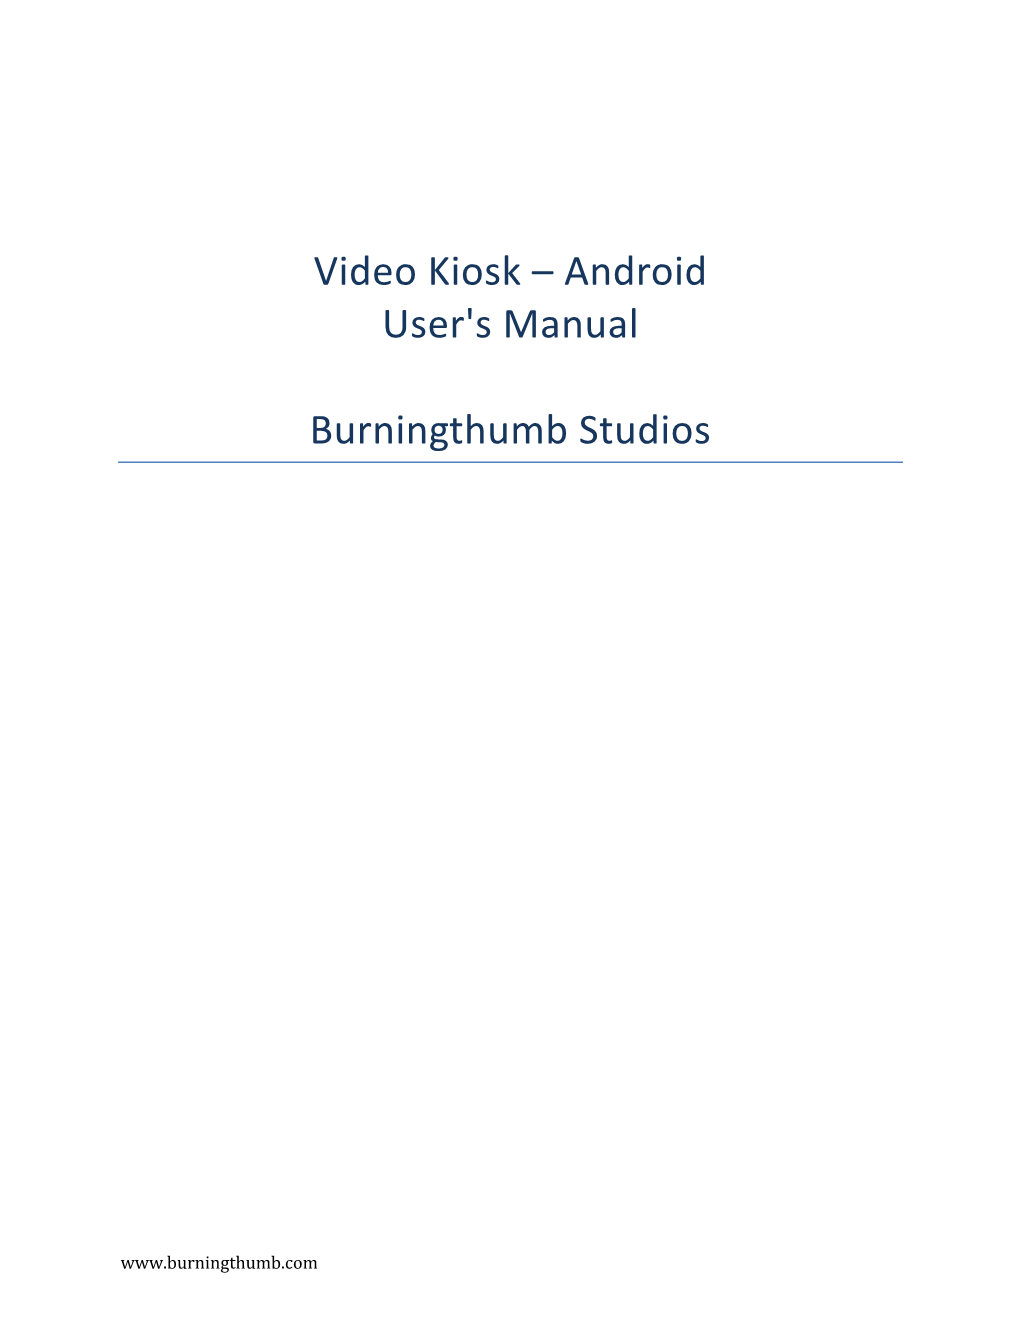 Video Kiosk – Android User's Manual Burningthumb Studios